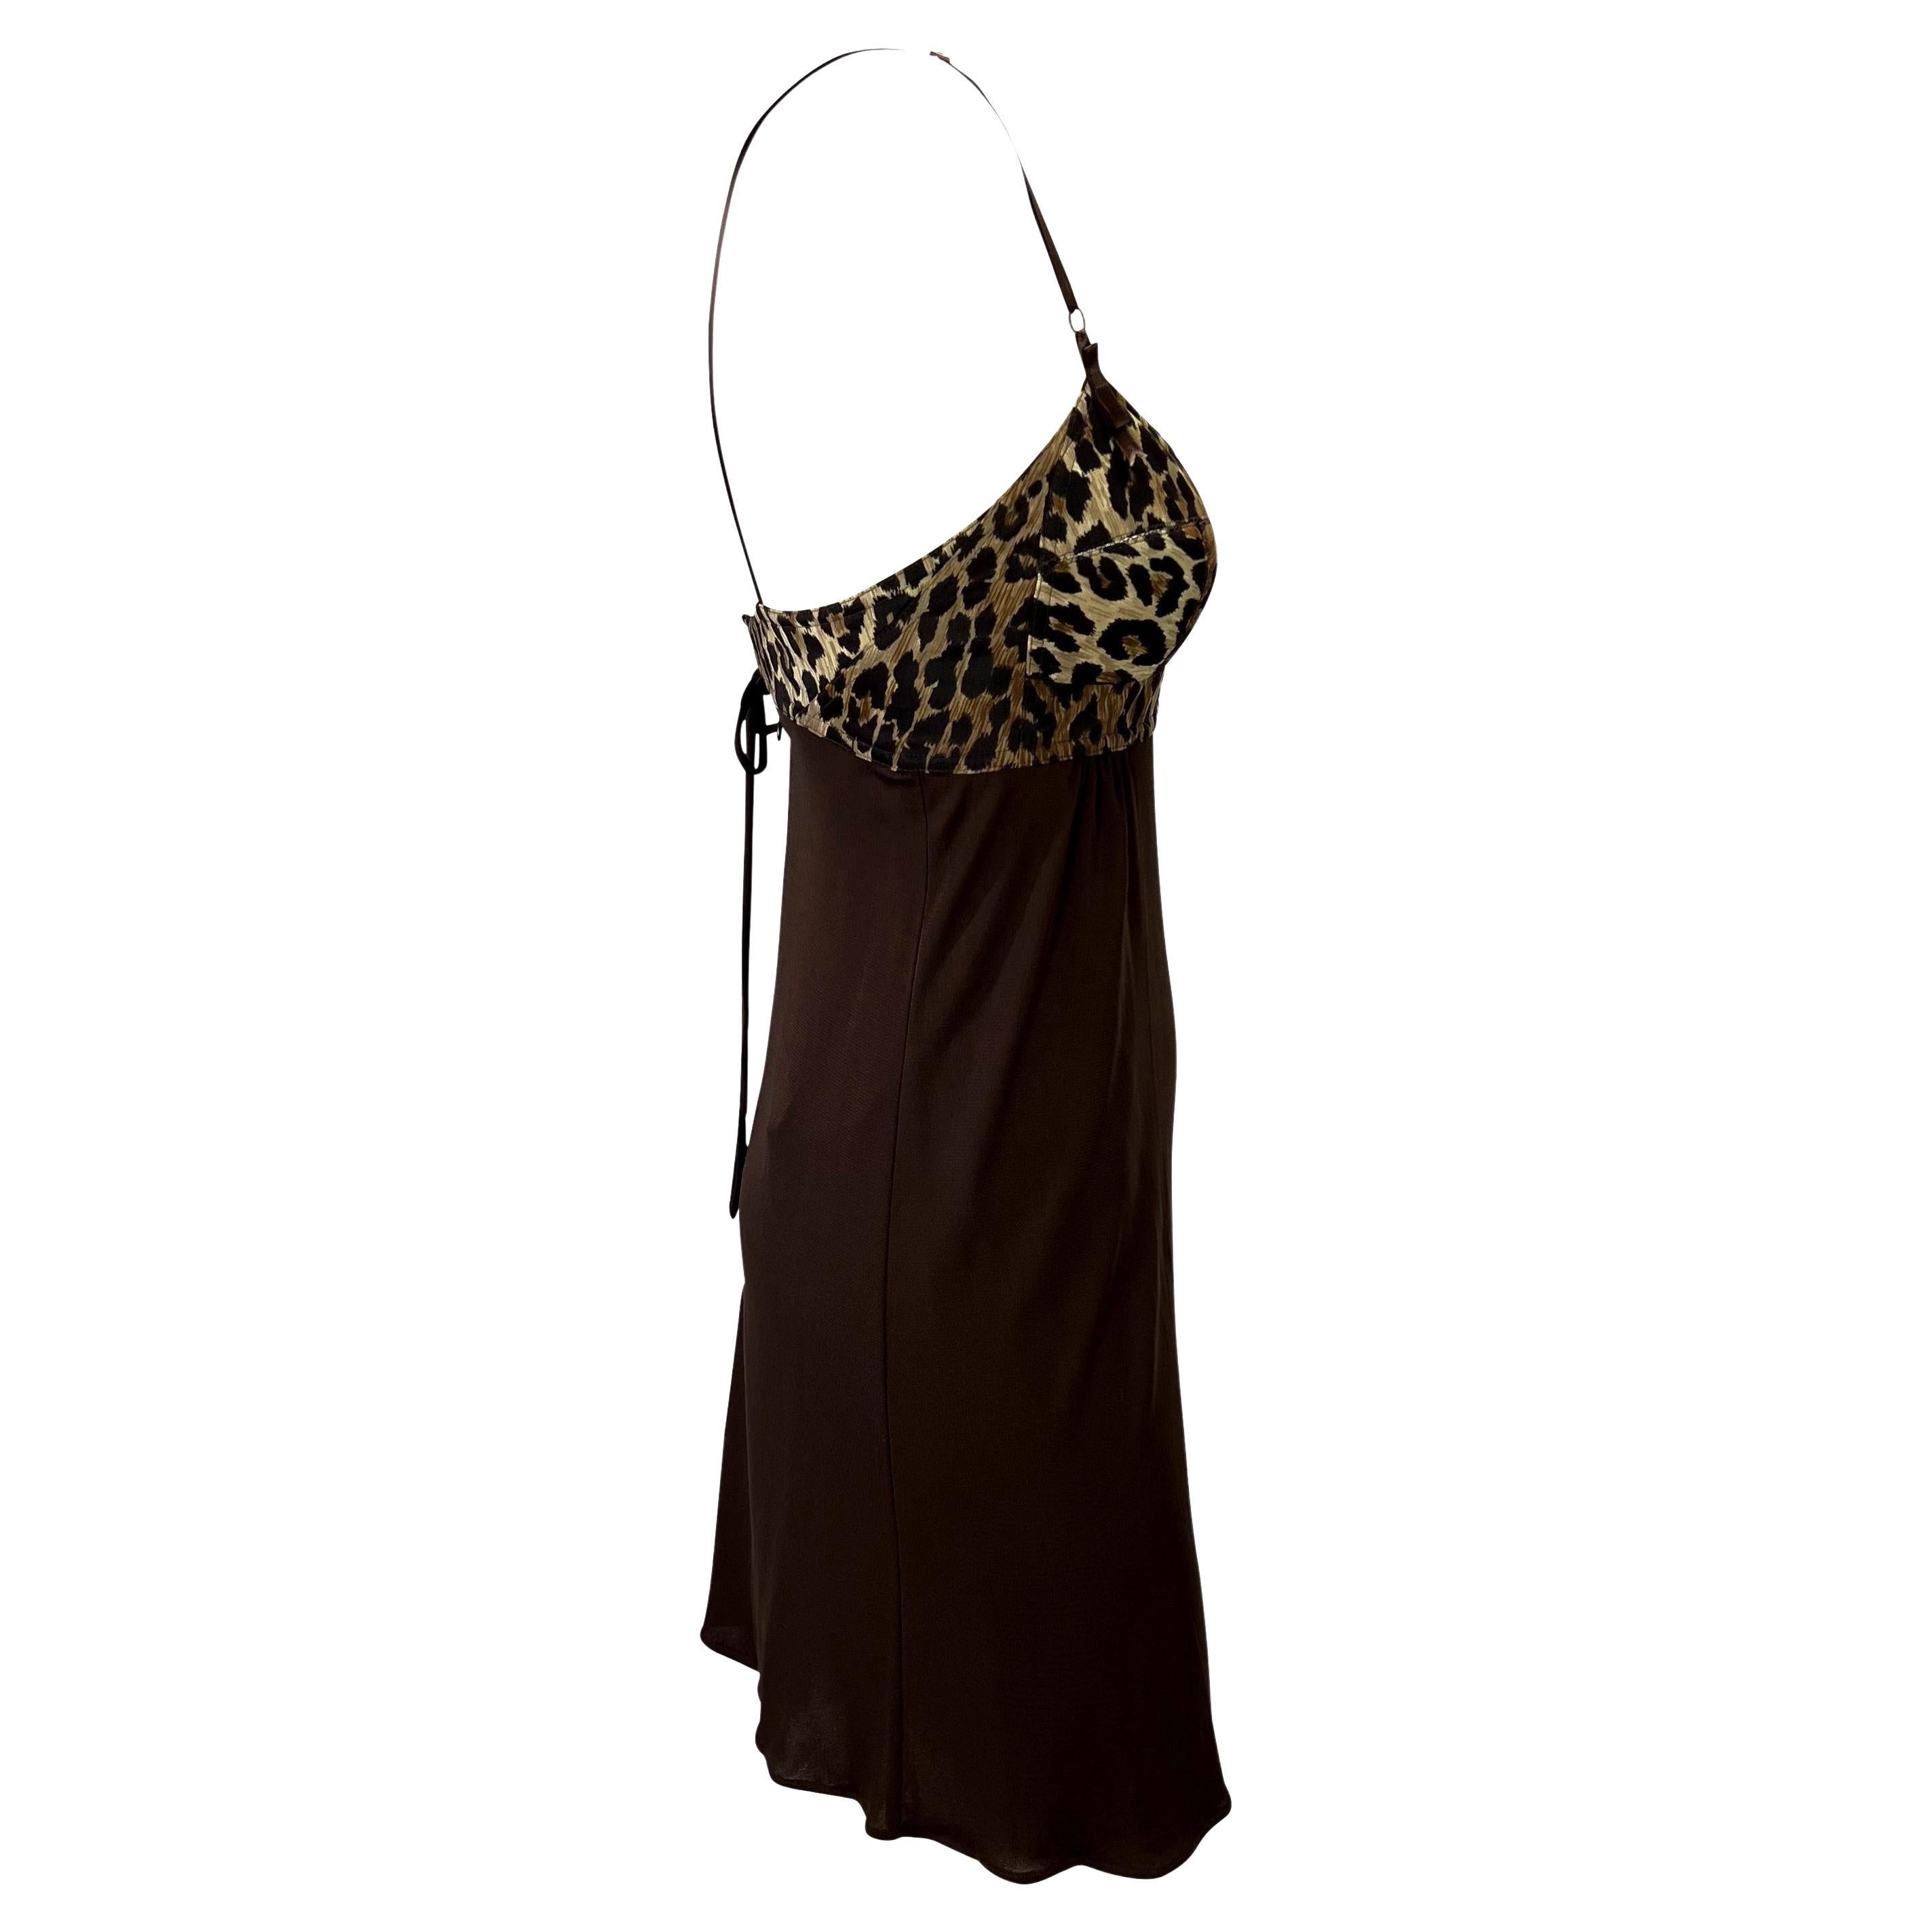 Women's S/S 1997 Dolce & Gabbana Cheetah Print Sheer Brown Bustier Slip Dress For Sale